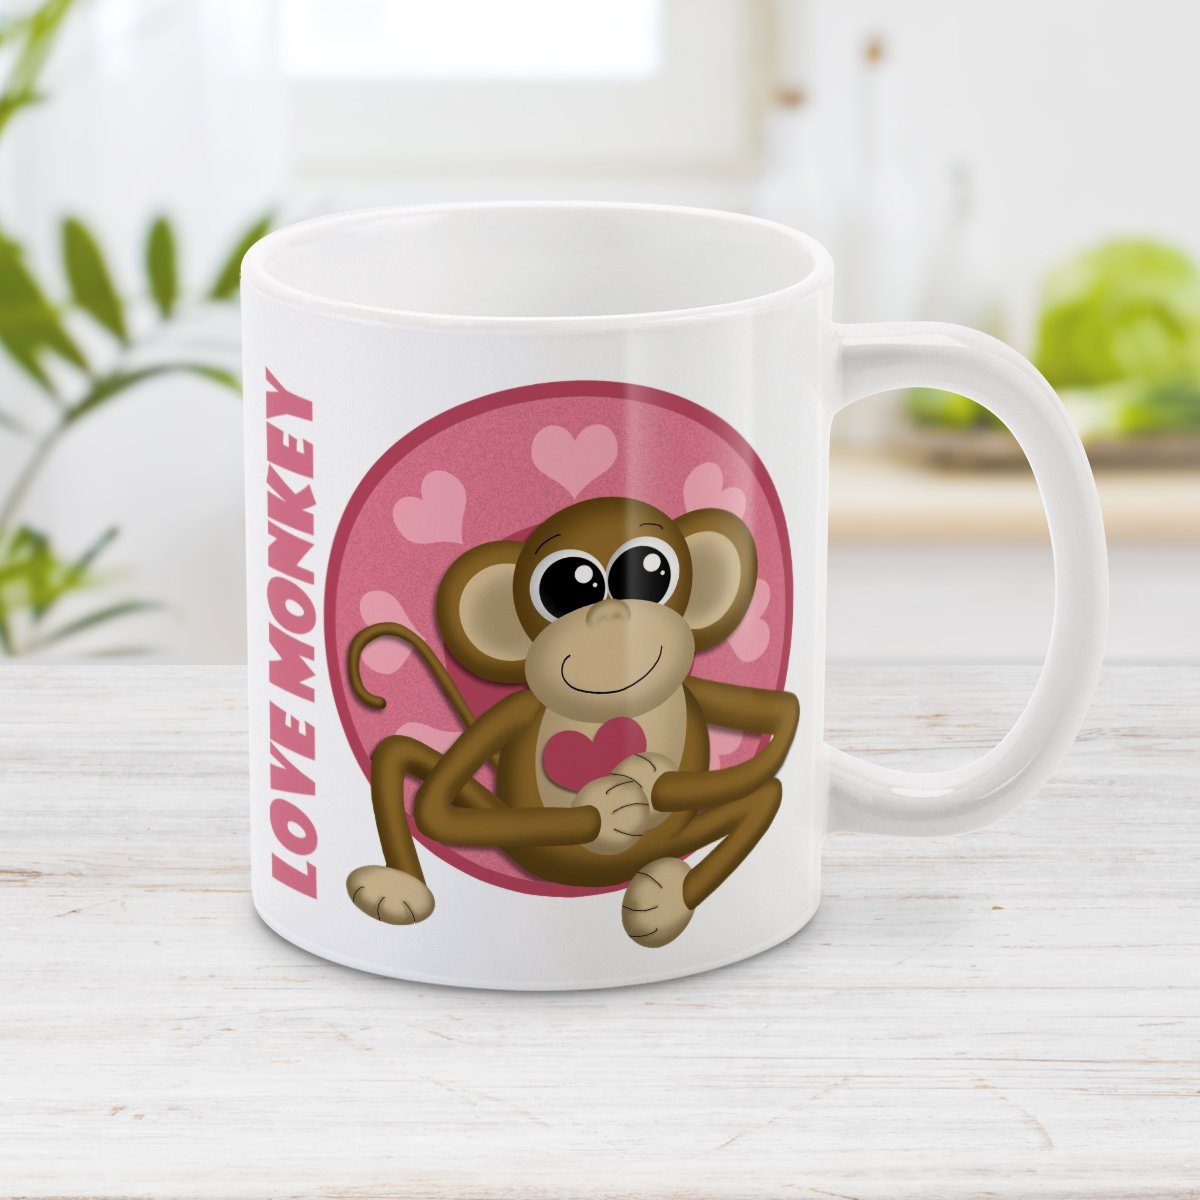 Love Monkey Mug - Cute Heart Love Monkey Mug at Amy's Coffee Mugs